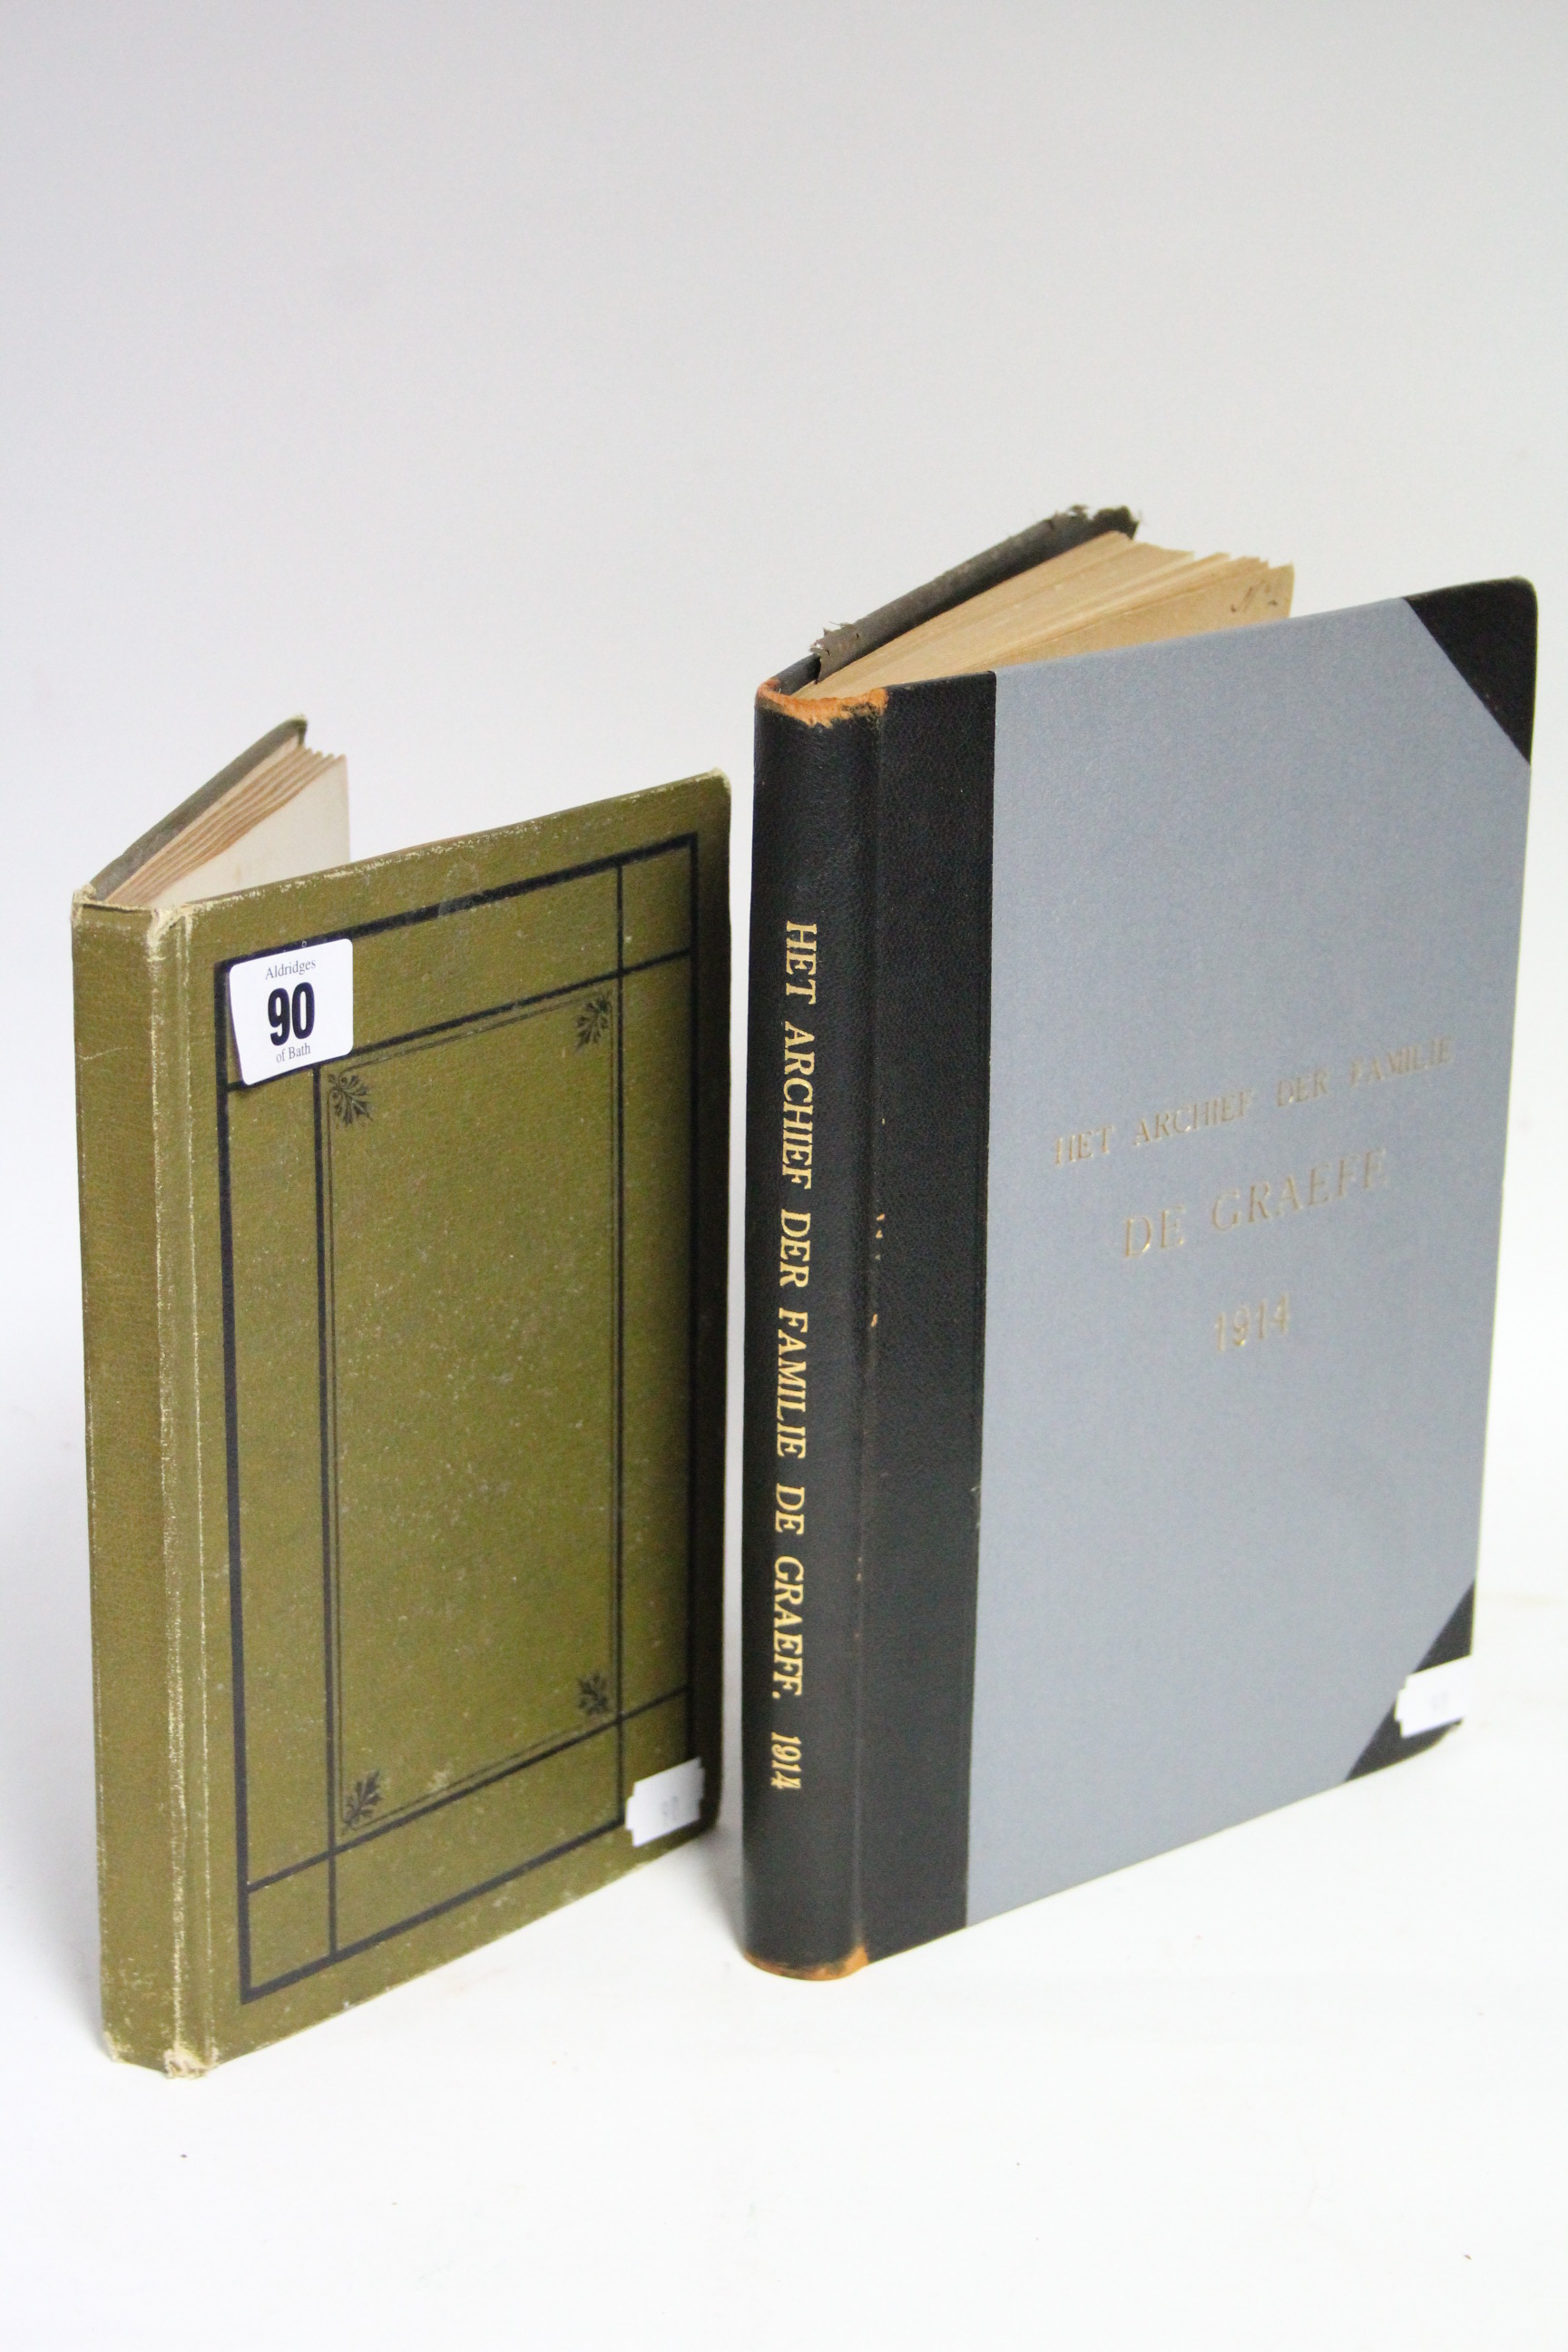 An early 20th century Dutch volume “Het Archief Der Familie De Graeff, Inventaris En Regesten” by Mr